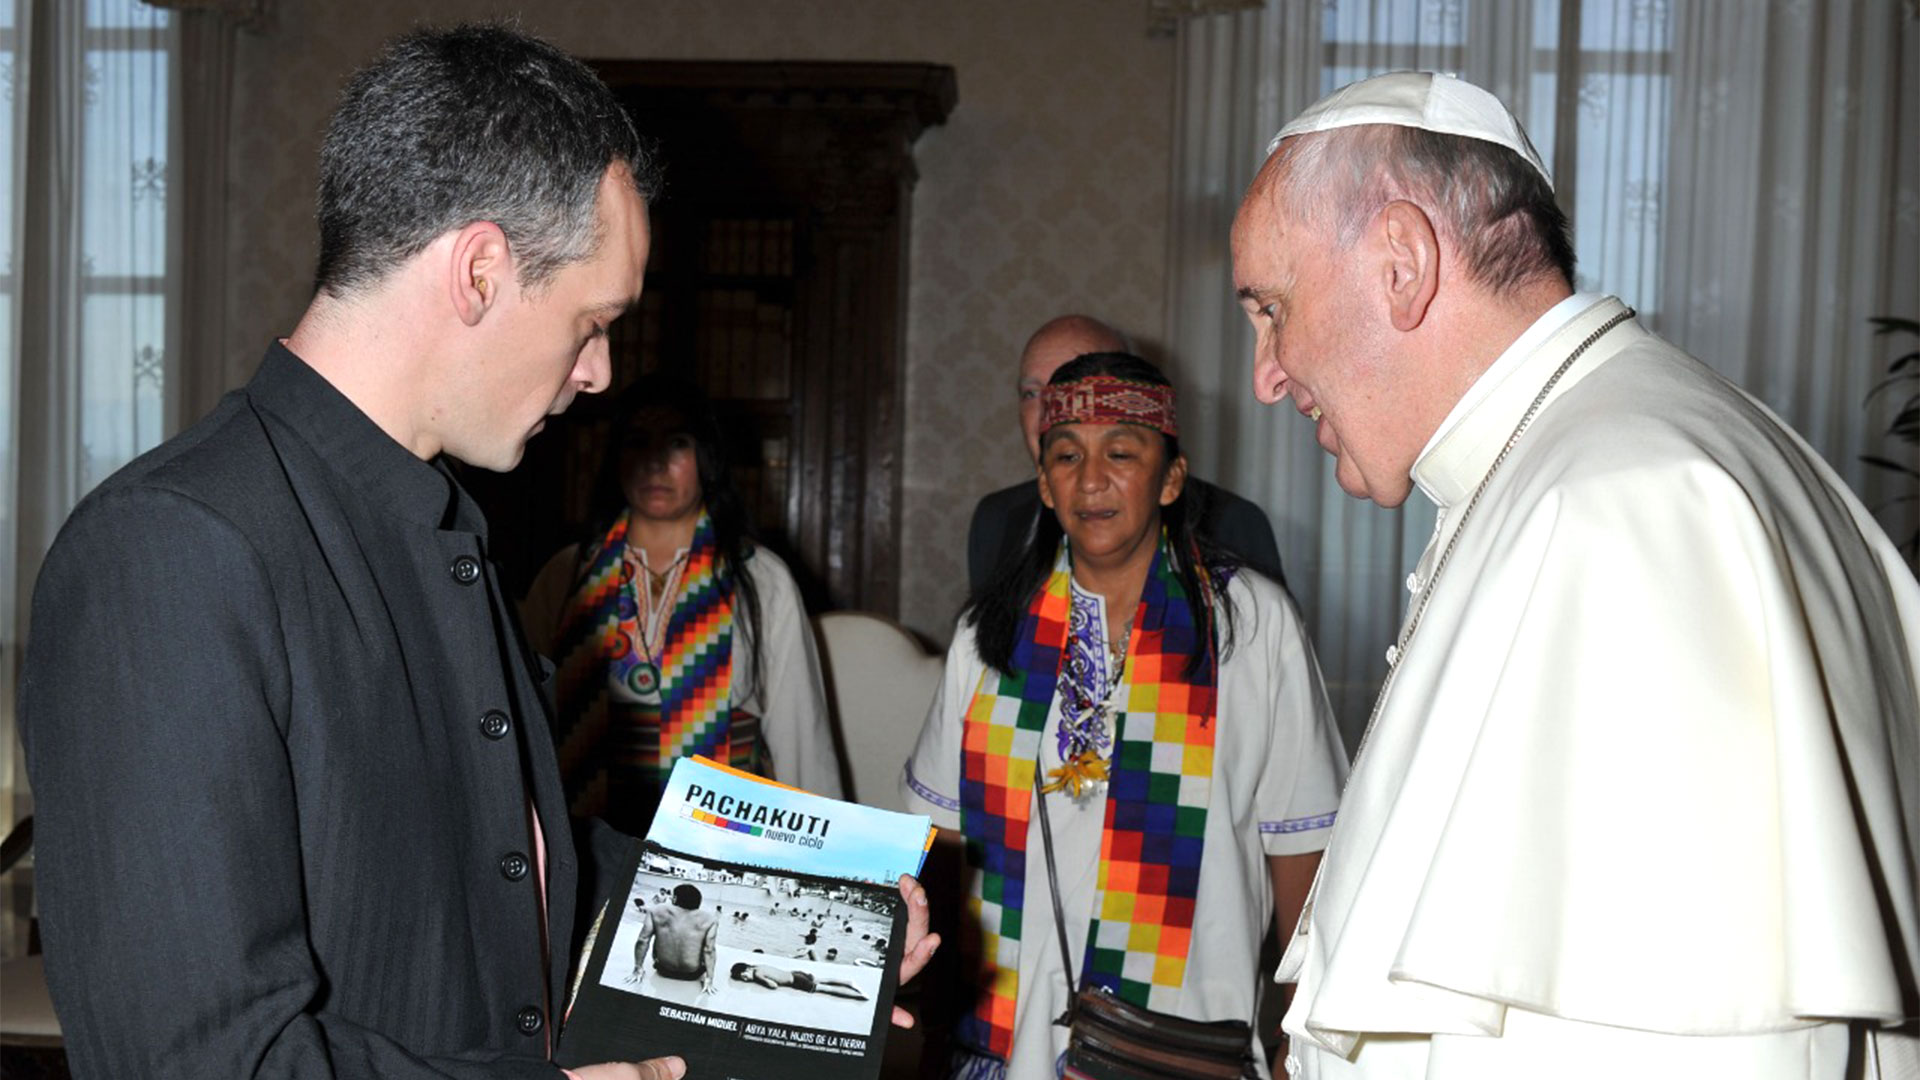 El papa Francisco recibe un ejemplar de la revista Pachakuti